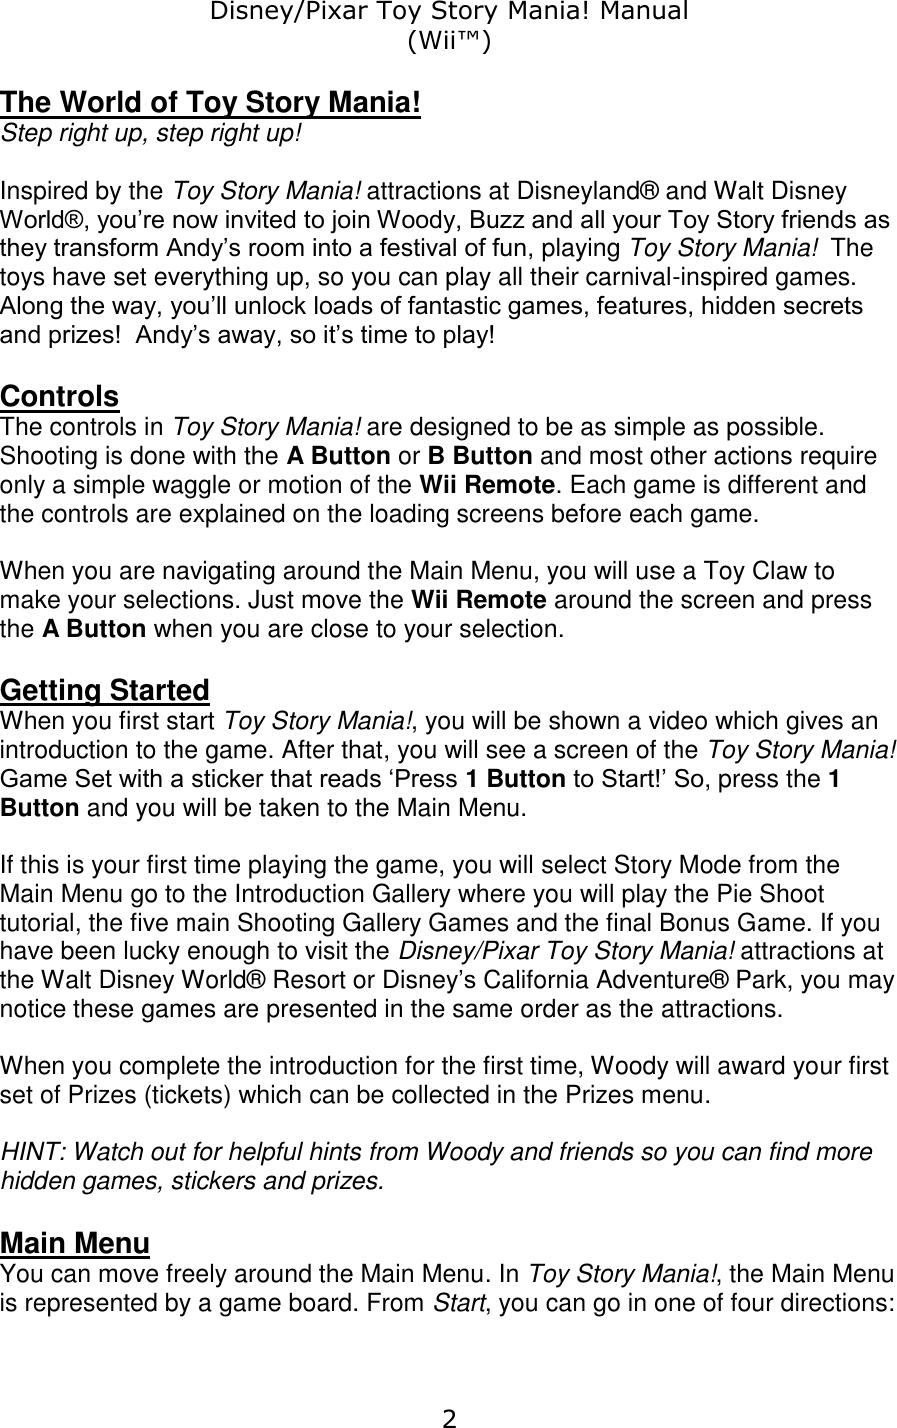 Page 2 of 7 - Disney-Interactive-Studios Disney-Interactive-Studios-Toy-Story-Mania-Users-Manual-  Disney-interactive-studios-toy-story-mania-users-manual